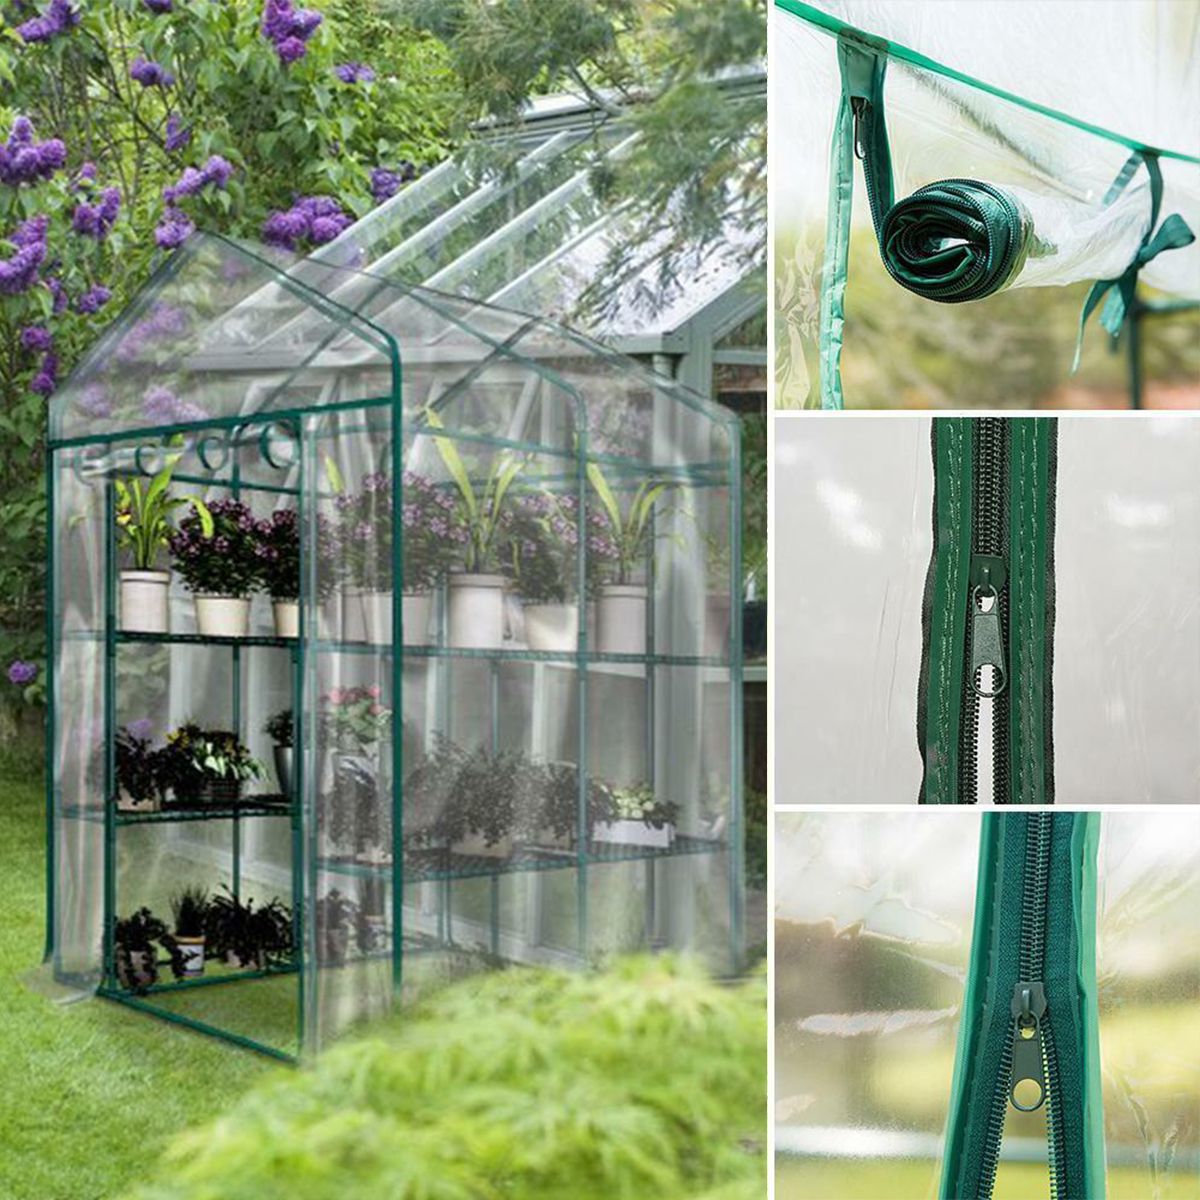 3-Tier-Greenhouse-6-Shelves-PVC-Cover-Garden-Cover-Plants-Flower-House-w-Shelf-1725352